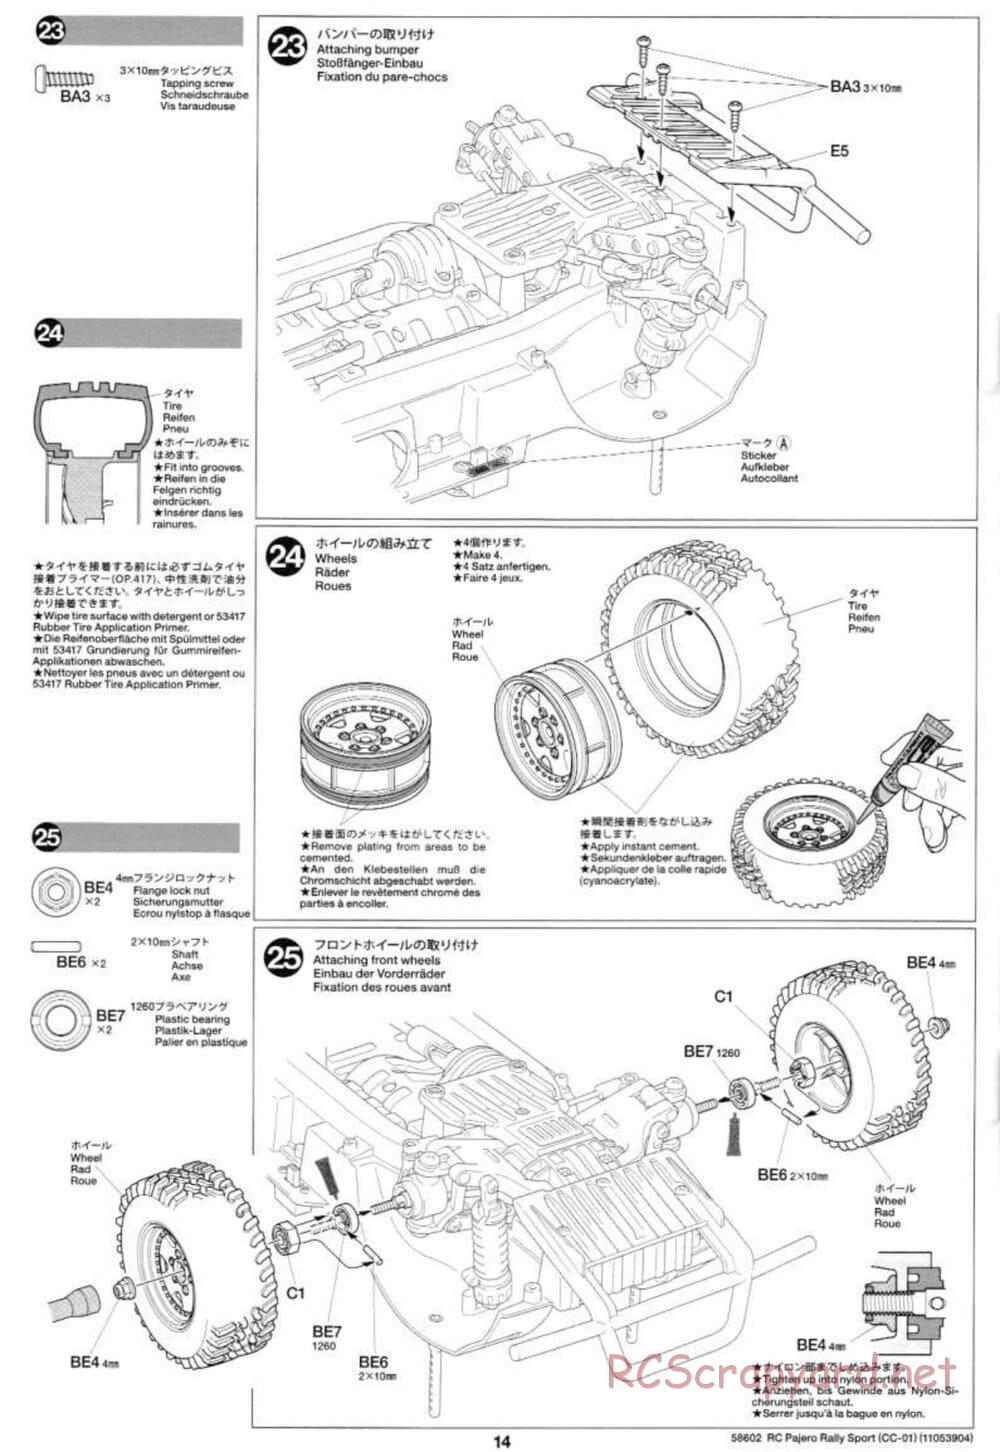 Tamiya - Mitsubishi Pajero Rally Sport - CC-01 Chassis - Manual - Page 14